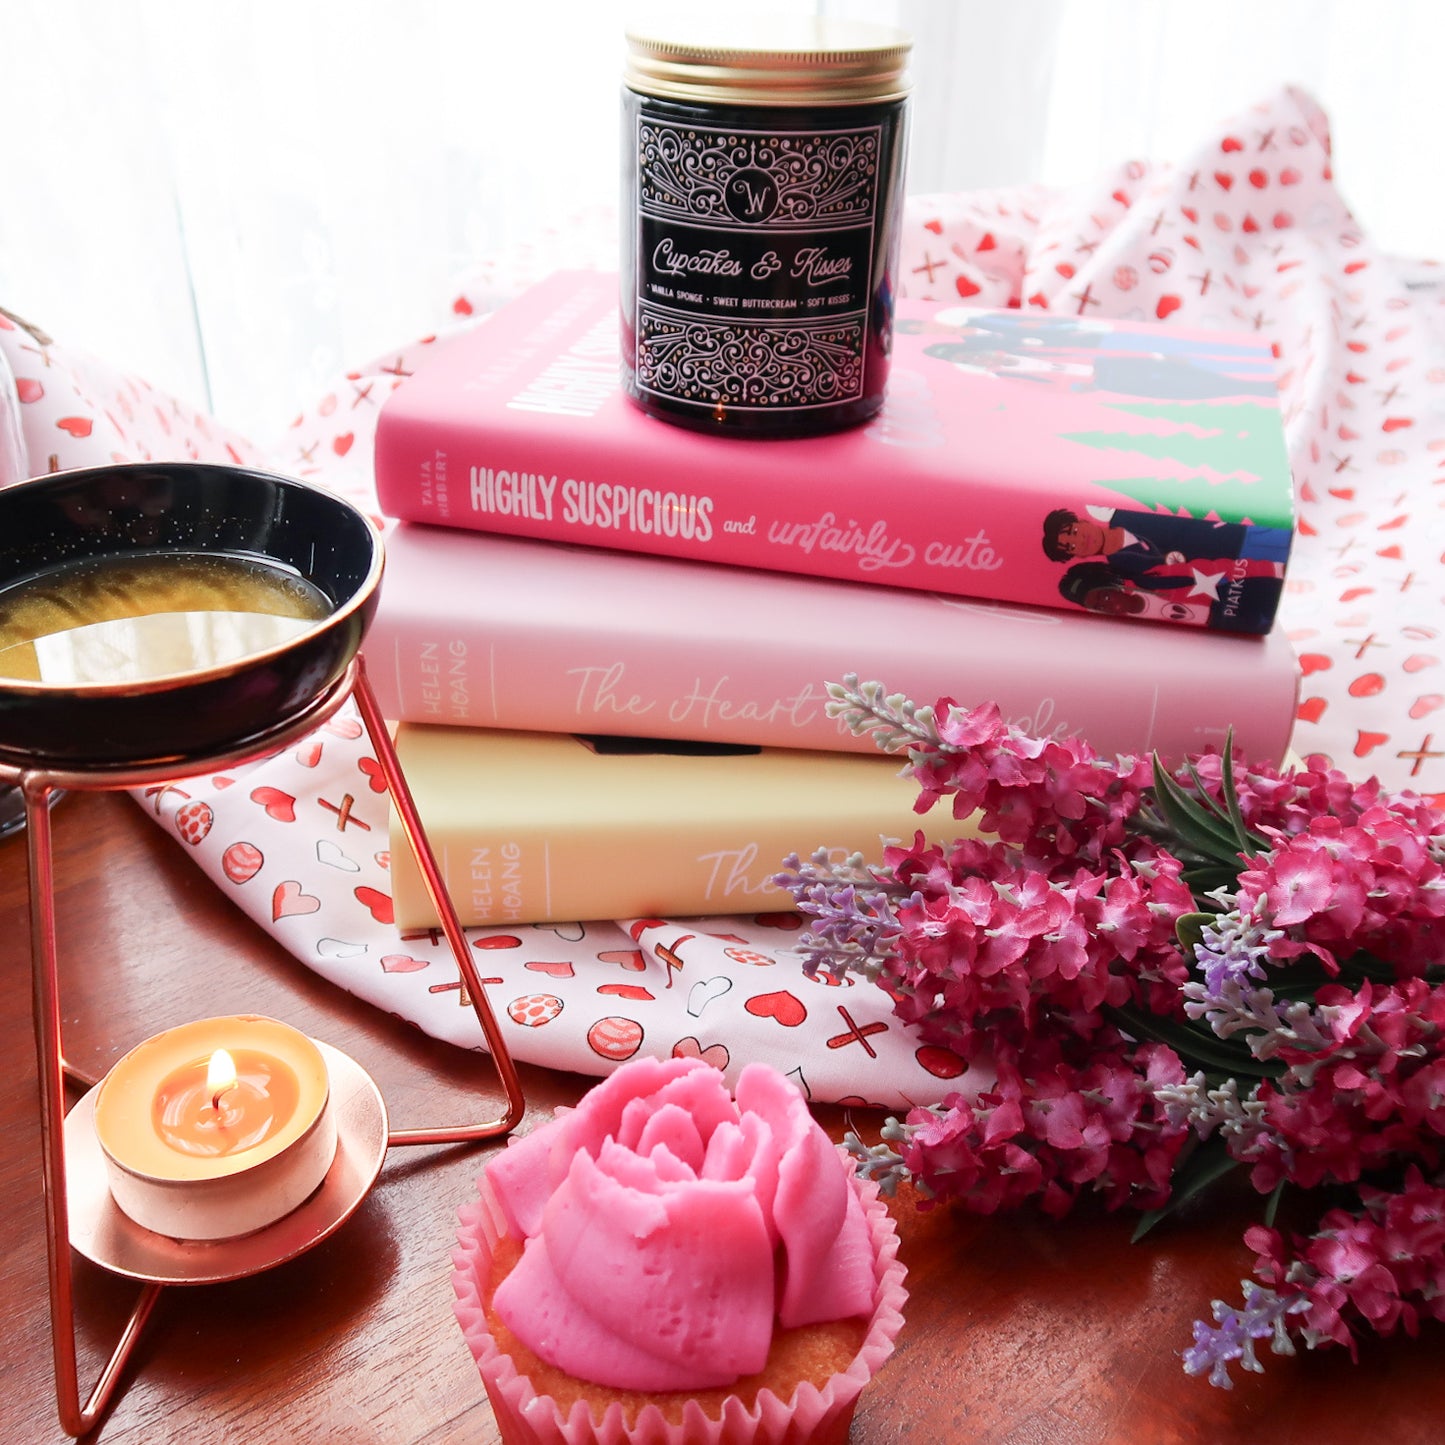 Cupcakes & Kisses Candle - Vanilla Sponge & Sweet Buttercream